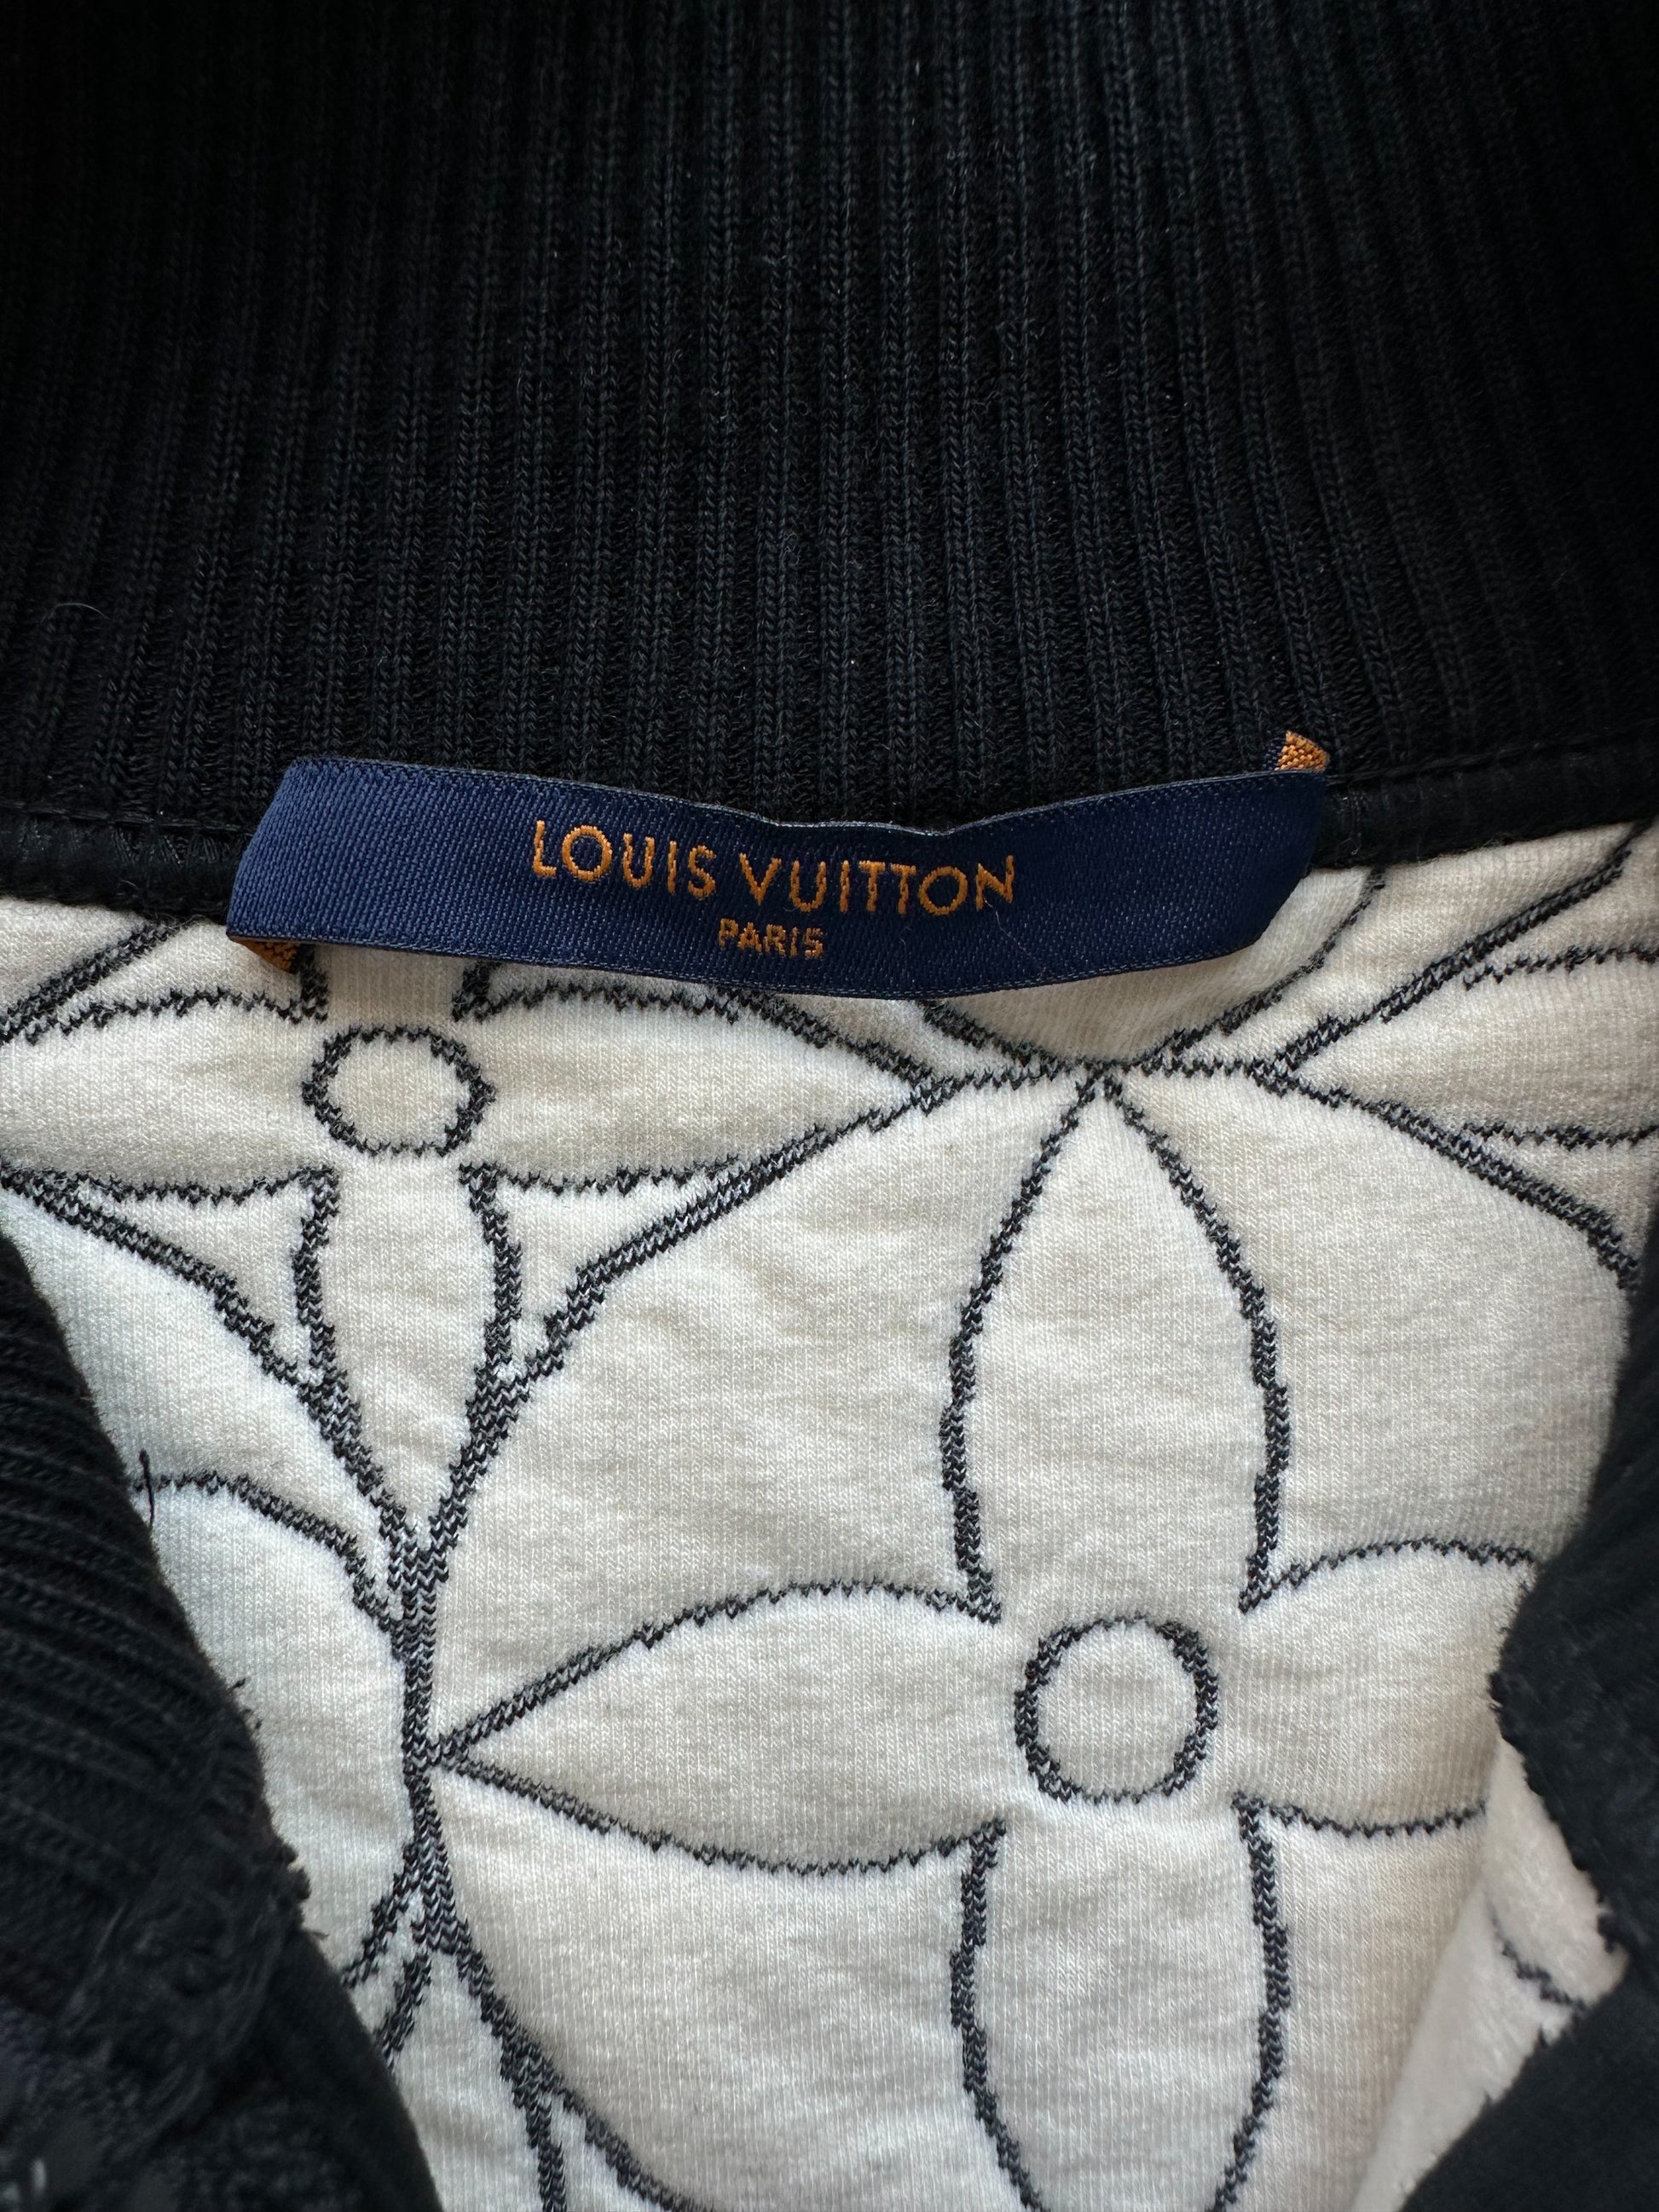 Louis Vuitton Monogram Flower Blouson/Sweatjacket REVIEW 